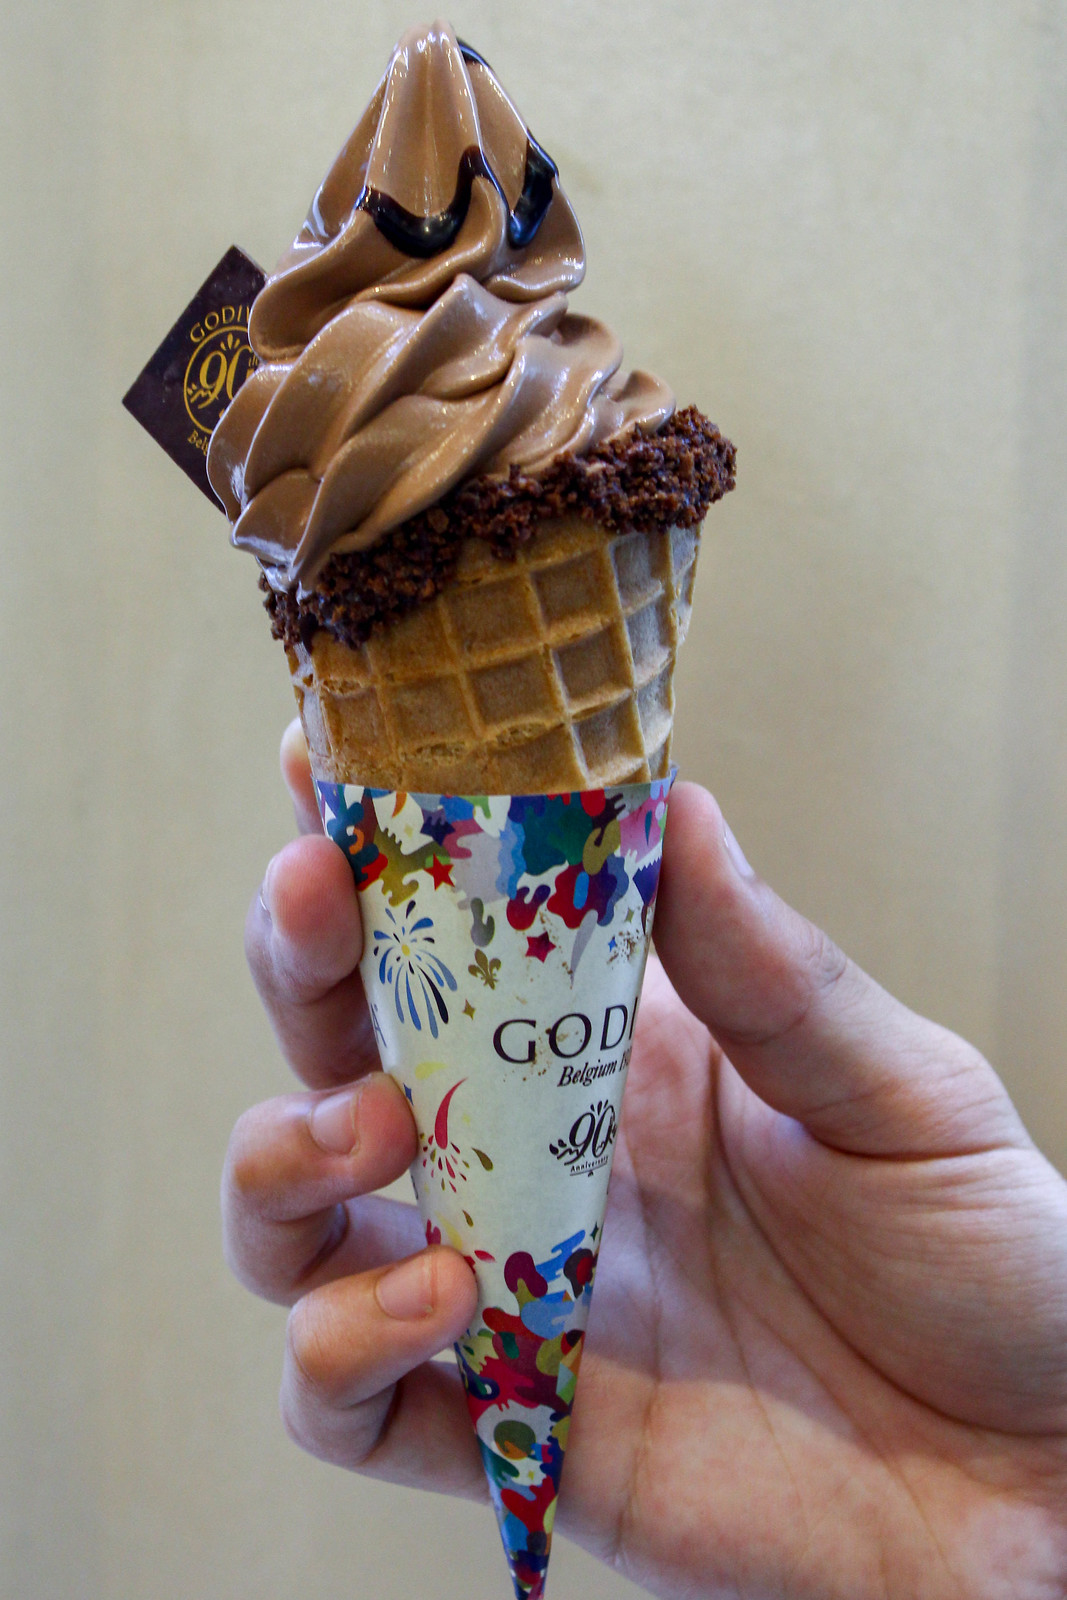 godiva_chocolate_soft_serve_front